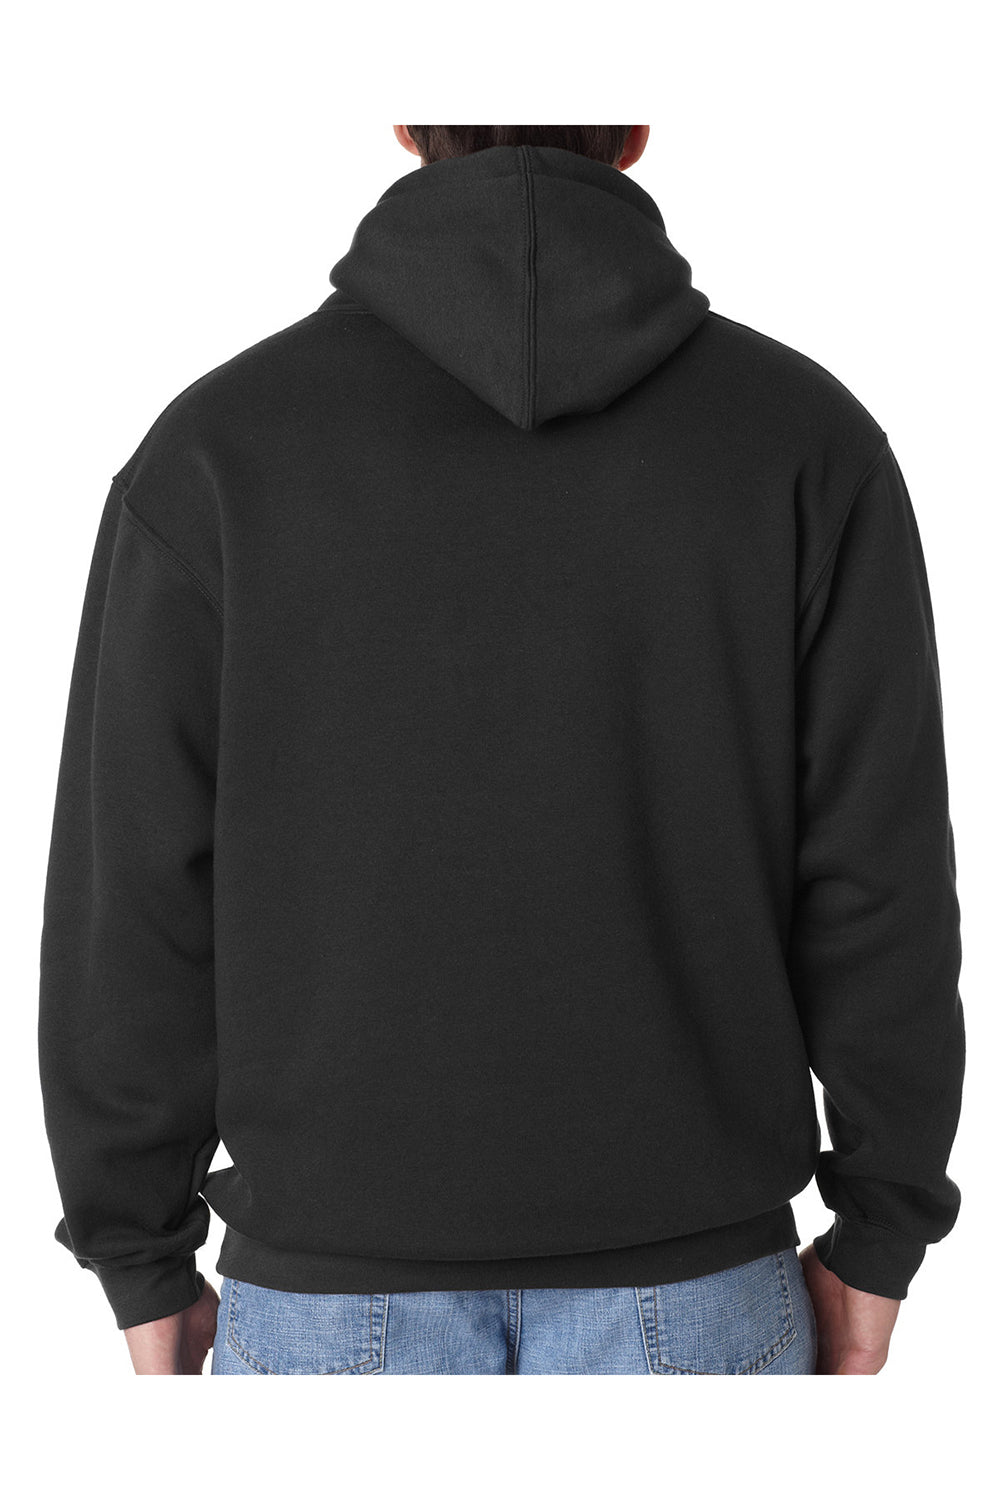 Bayside BA960 Mens USA Made Hooded Sweatshirt Hoodie Black Model Side